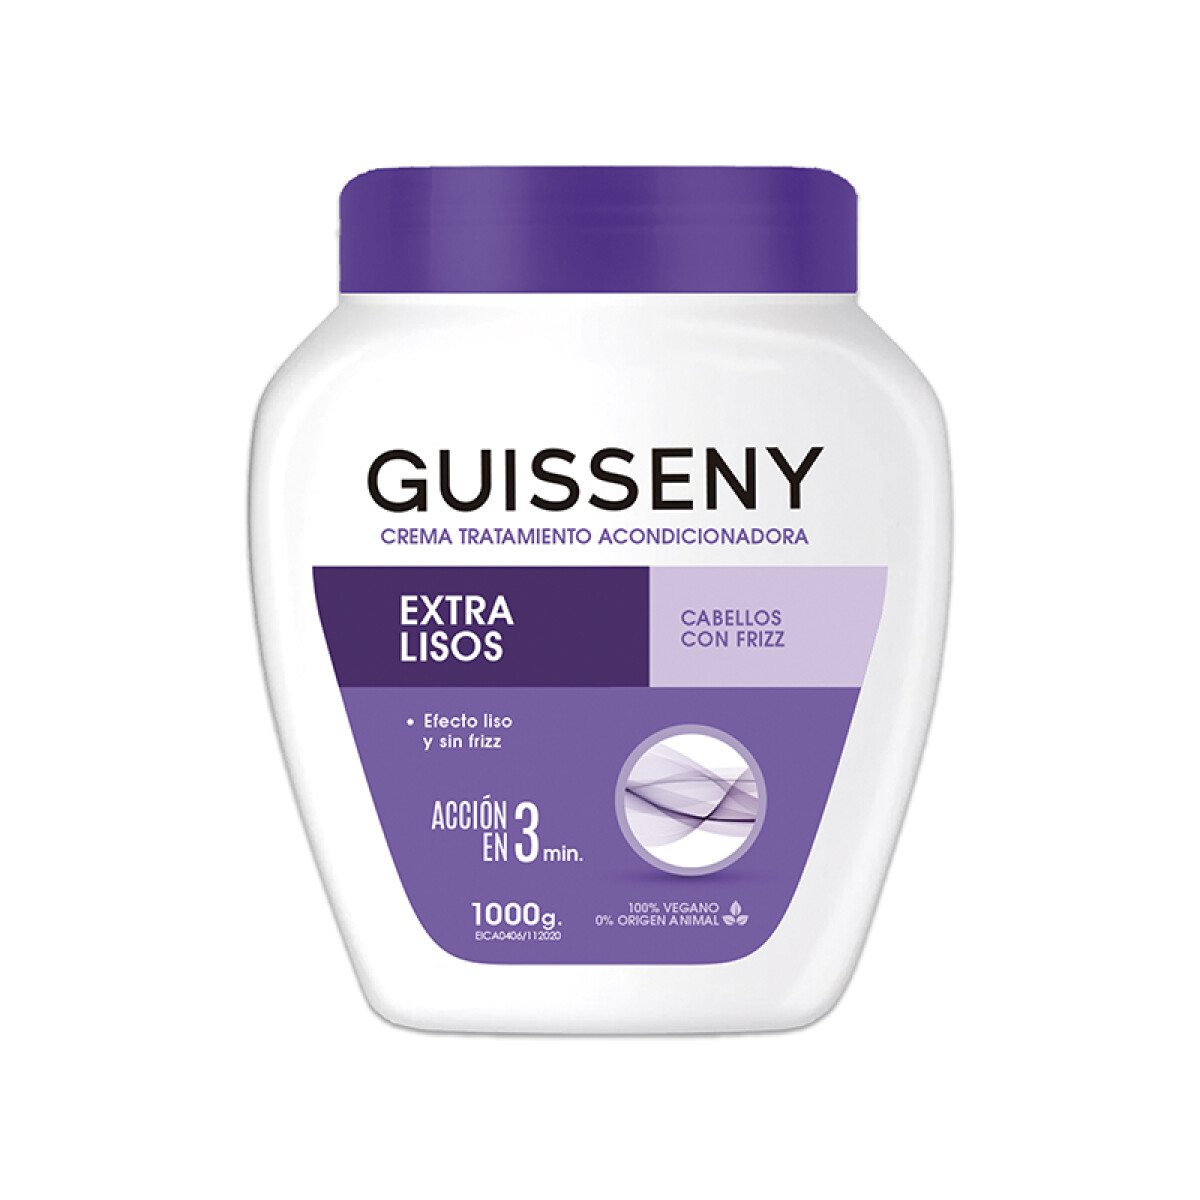 Crema tratamiento capilar 1000 g Guisseny - Extra lisos 